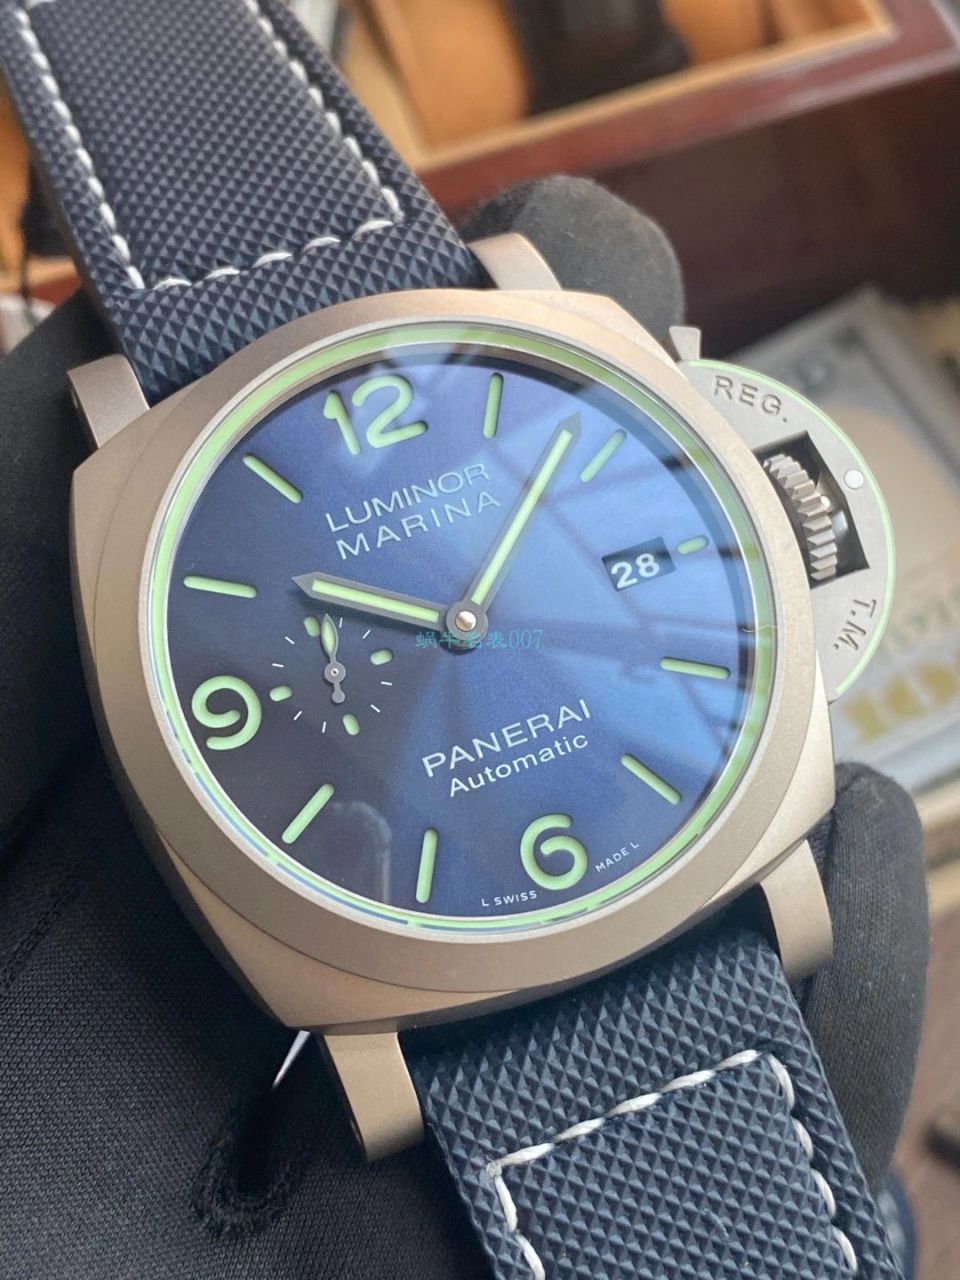 VS厂沛纳海LUMINOR顶级超A高仿手表PAM01117腕表 